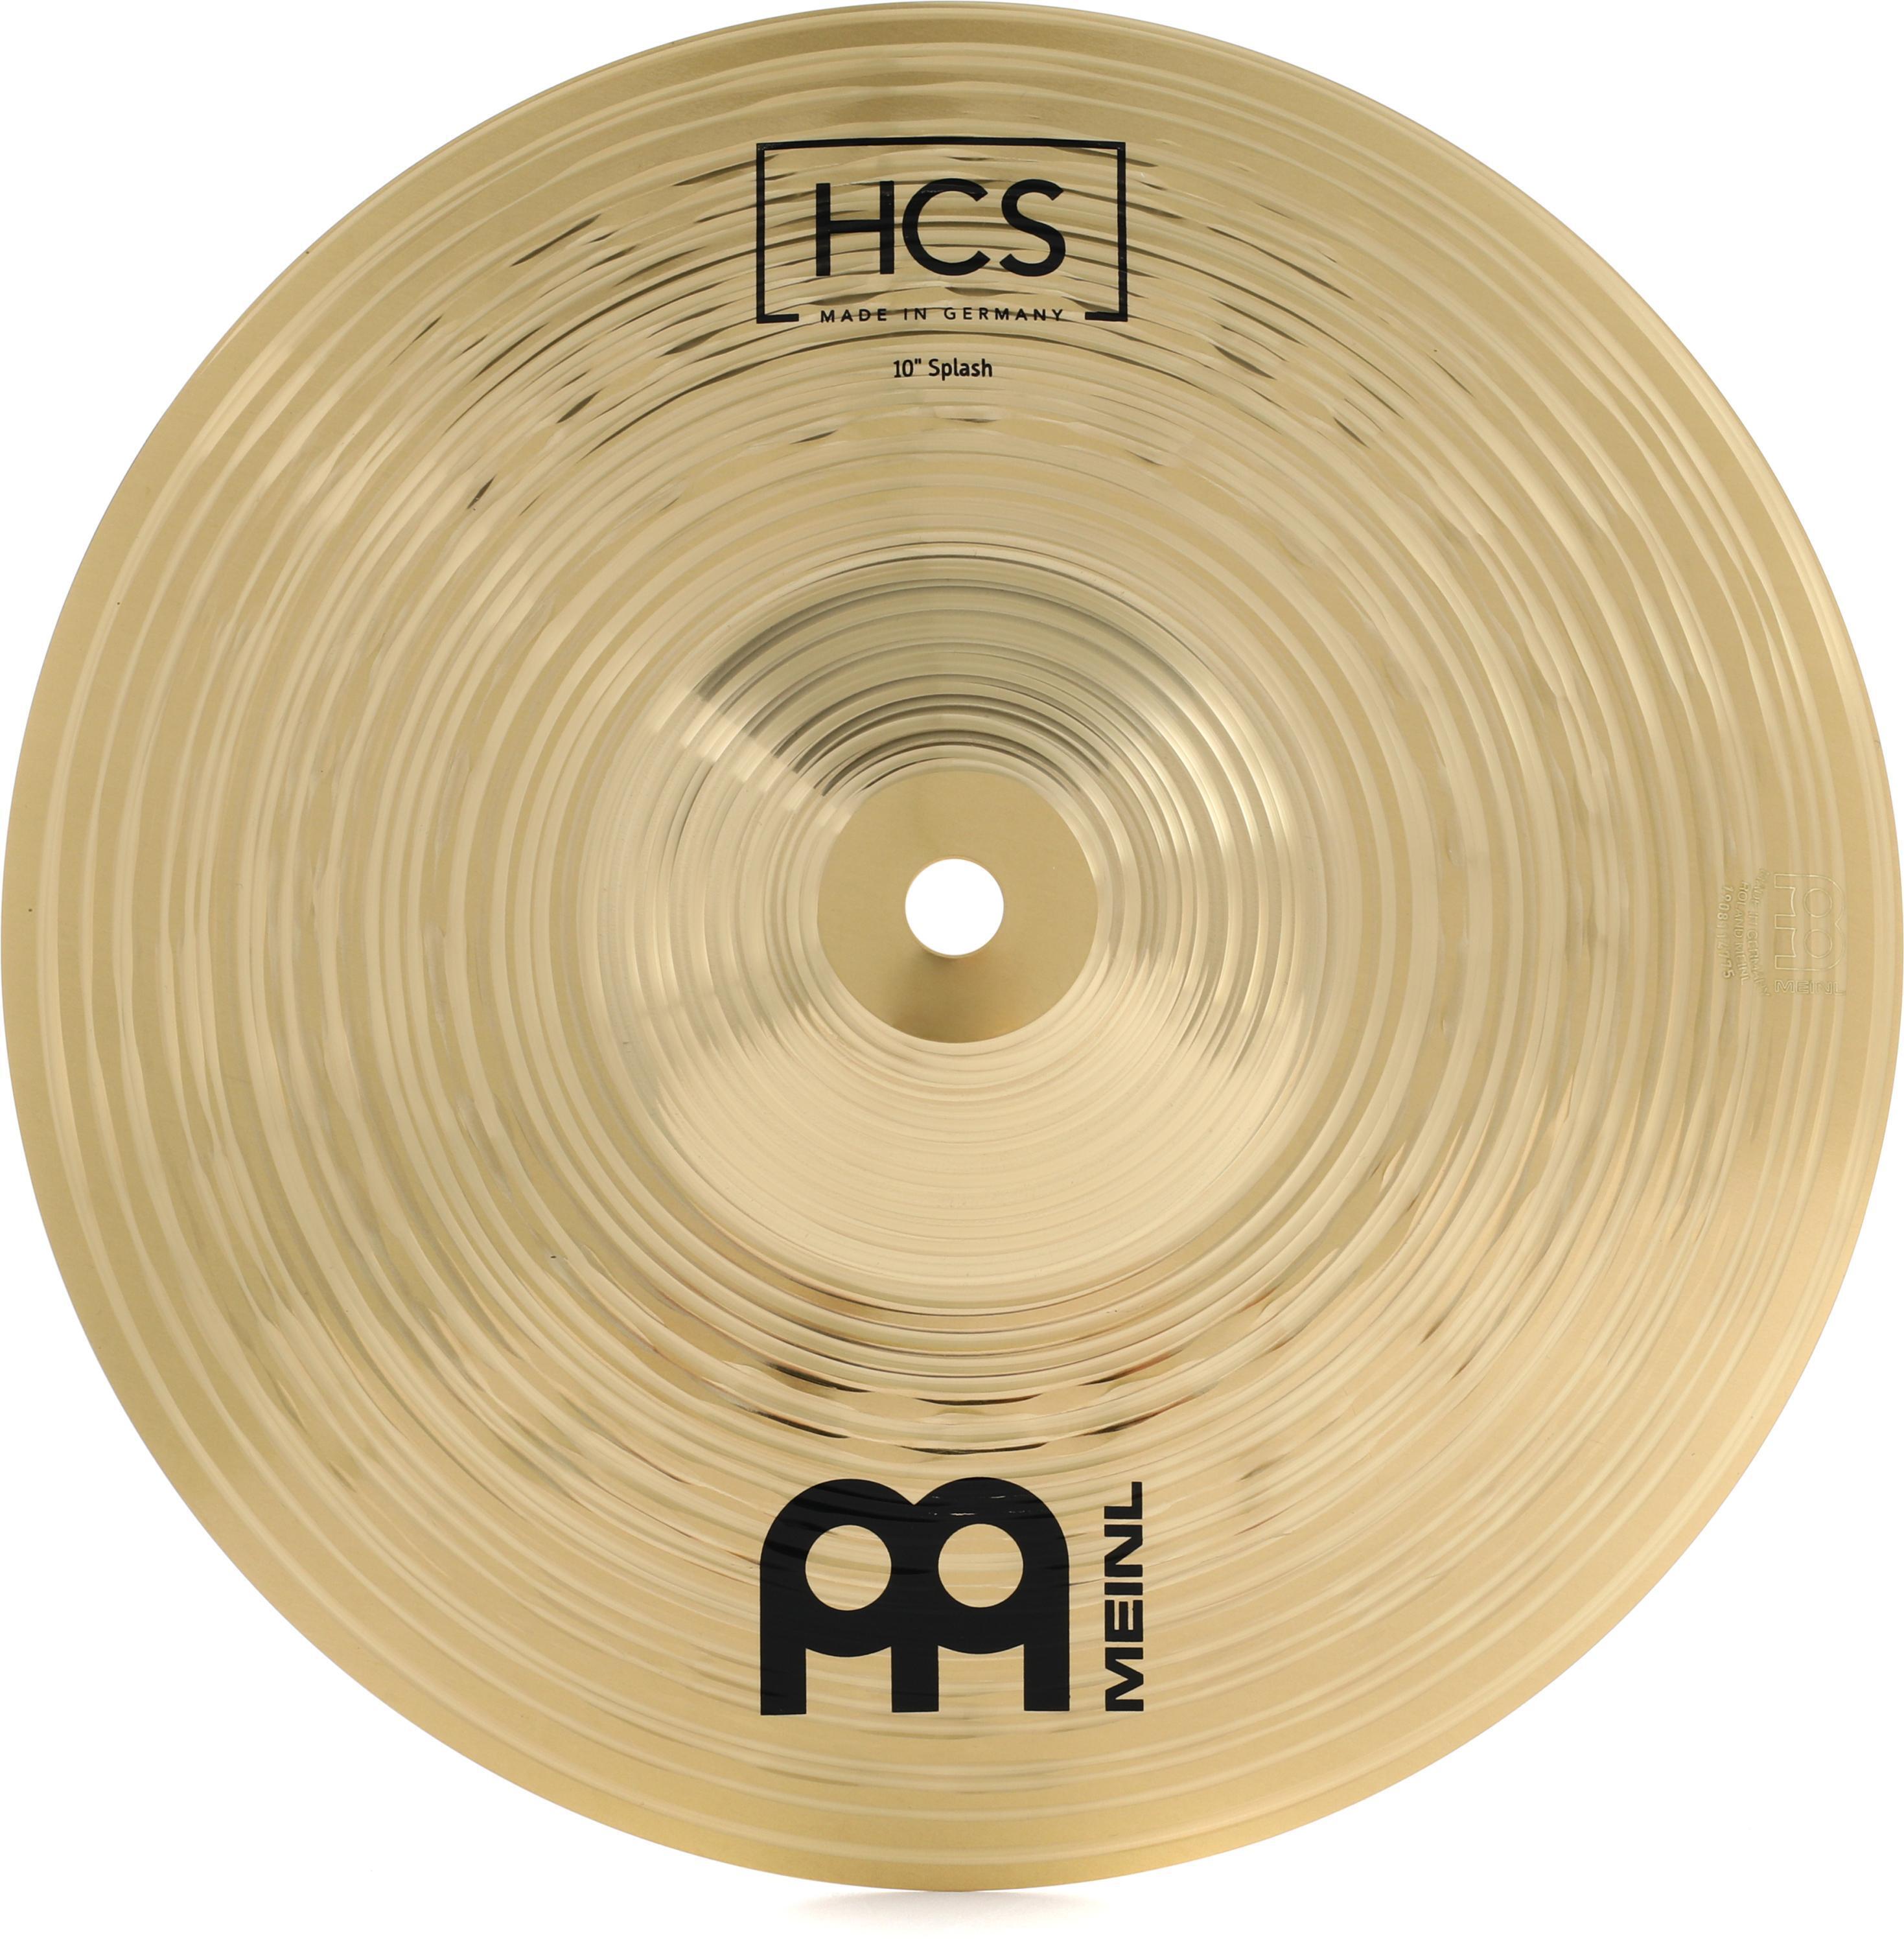 Meinl Cymbals 10-inch HCS Splash Cymbal | Sweetwater